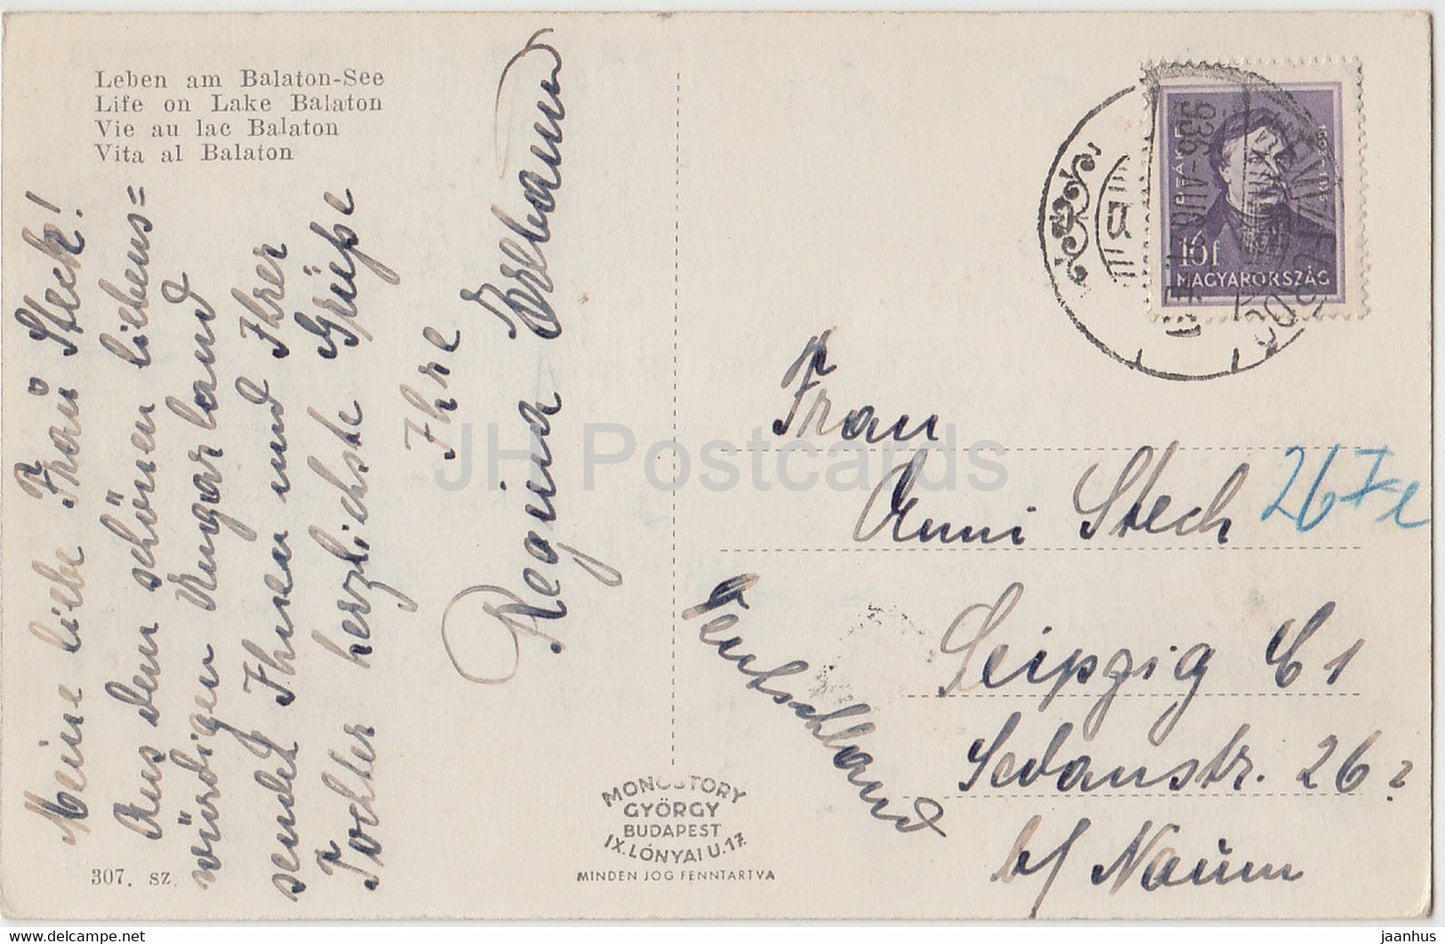 Balatoni elet - Leben am Balaton See - sailing boat - fishing - old postcard - 1921 - Hungary - used